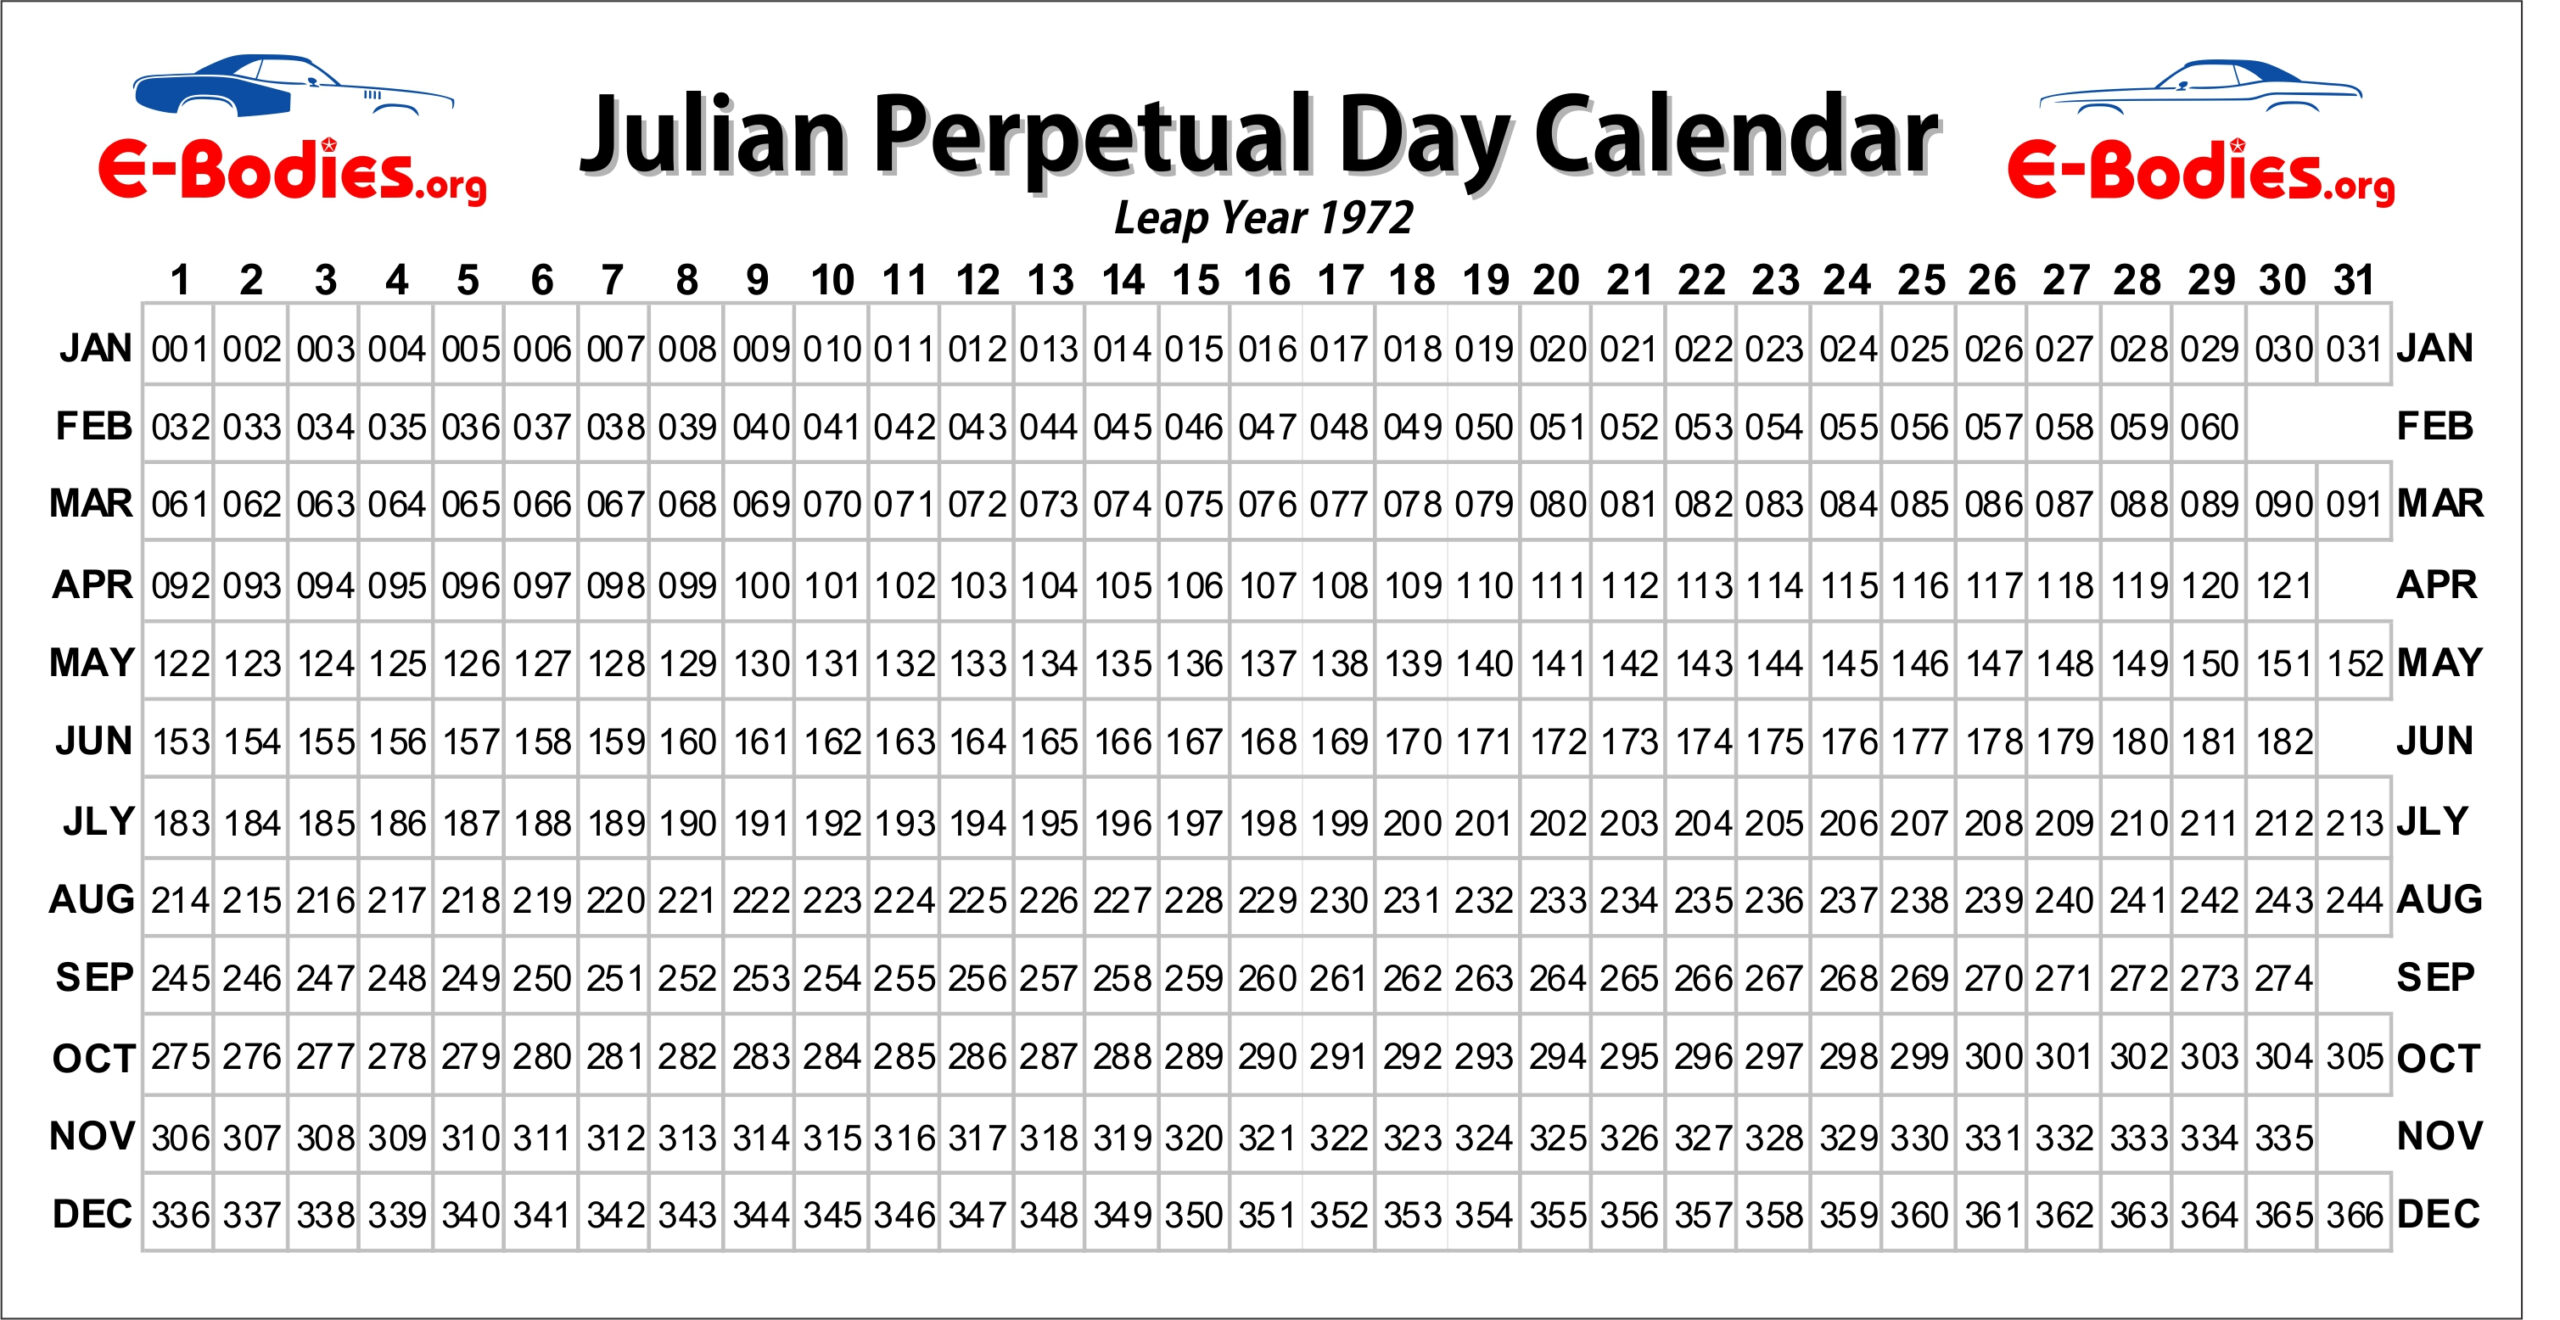 Mopar Julian Perpetual Day Calendar Leap Year - E-Bodies